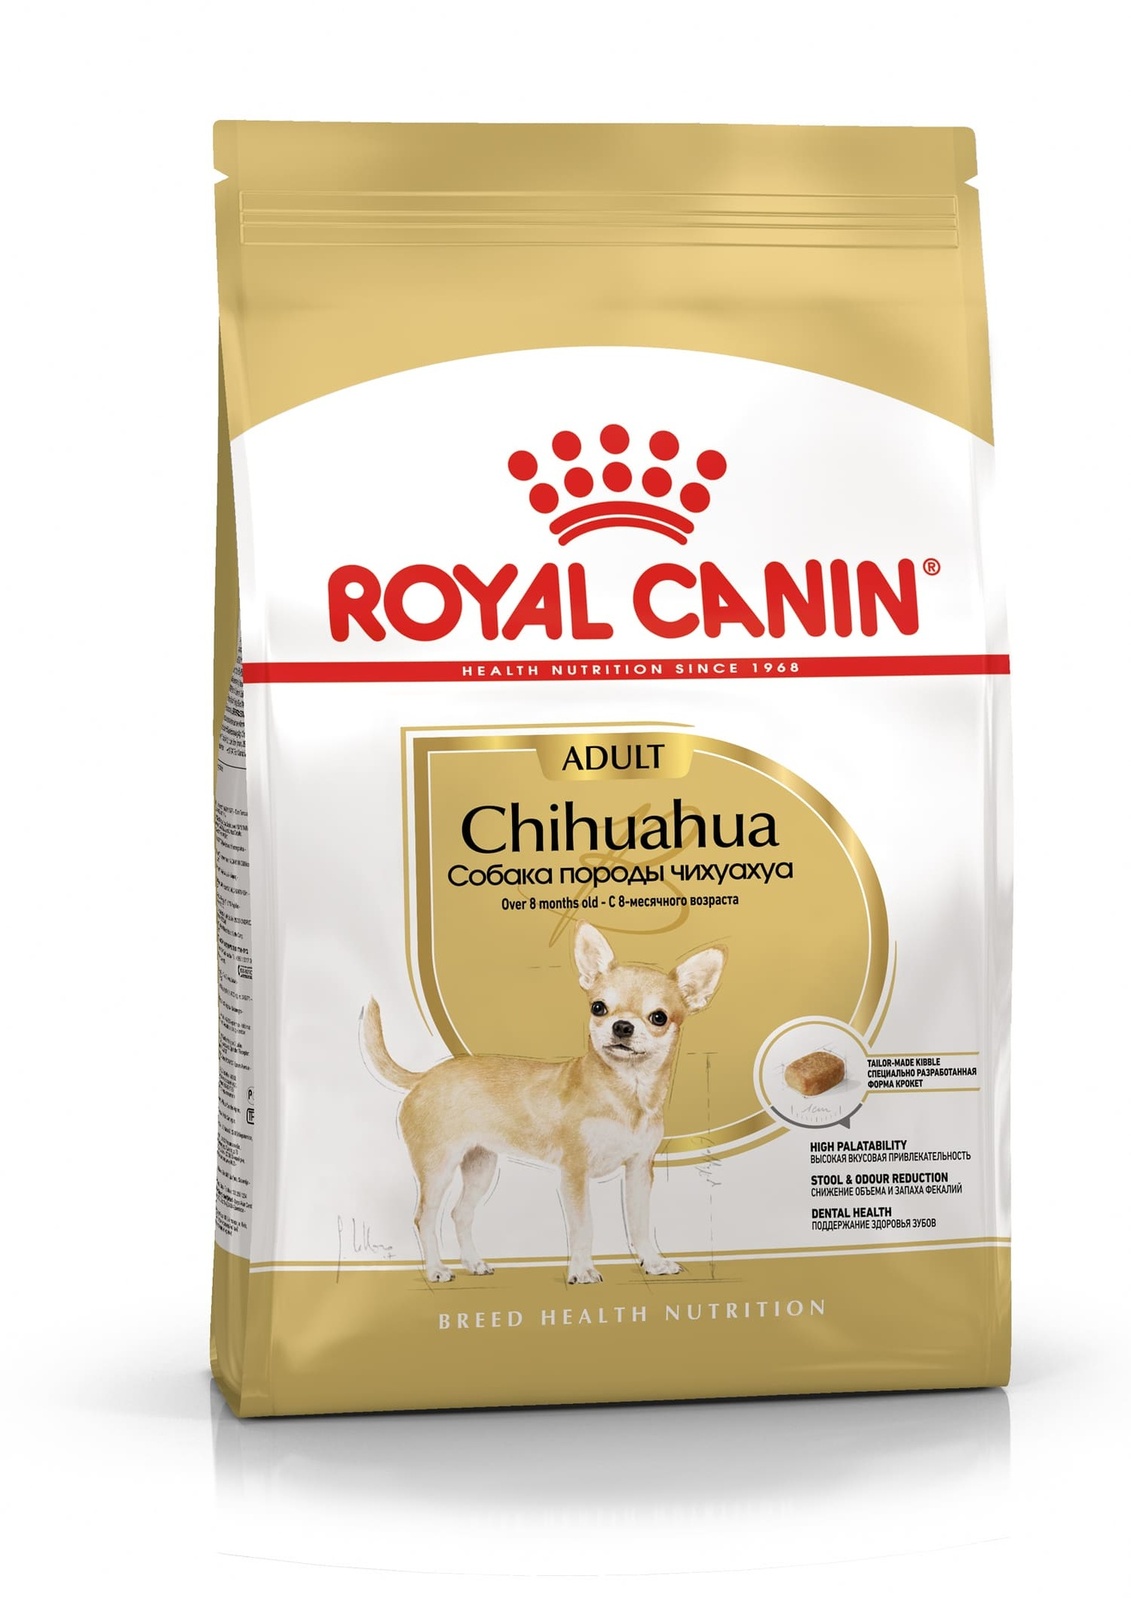 Royal Canin Royal Canin сухой корм для чихуахуа с 8 месяцев (500 г) корм для собак royal canin chihuahua adult сухой для чихуахуа с 8 месяцев 500 г